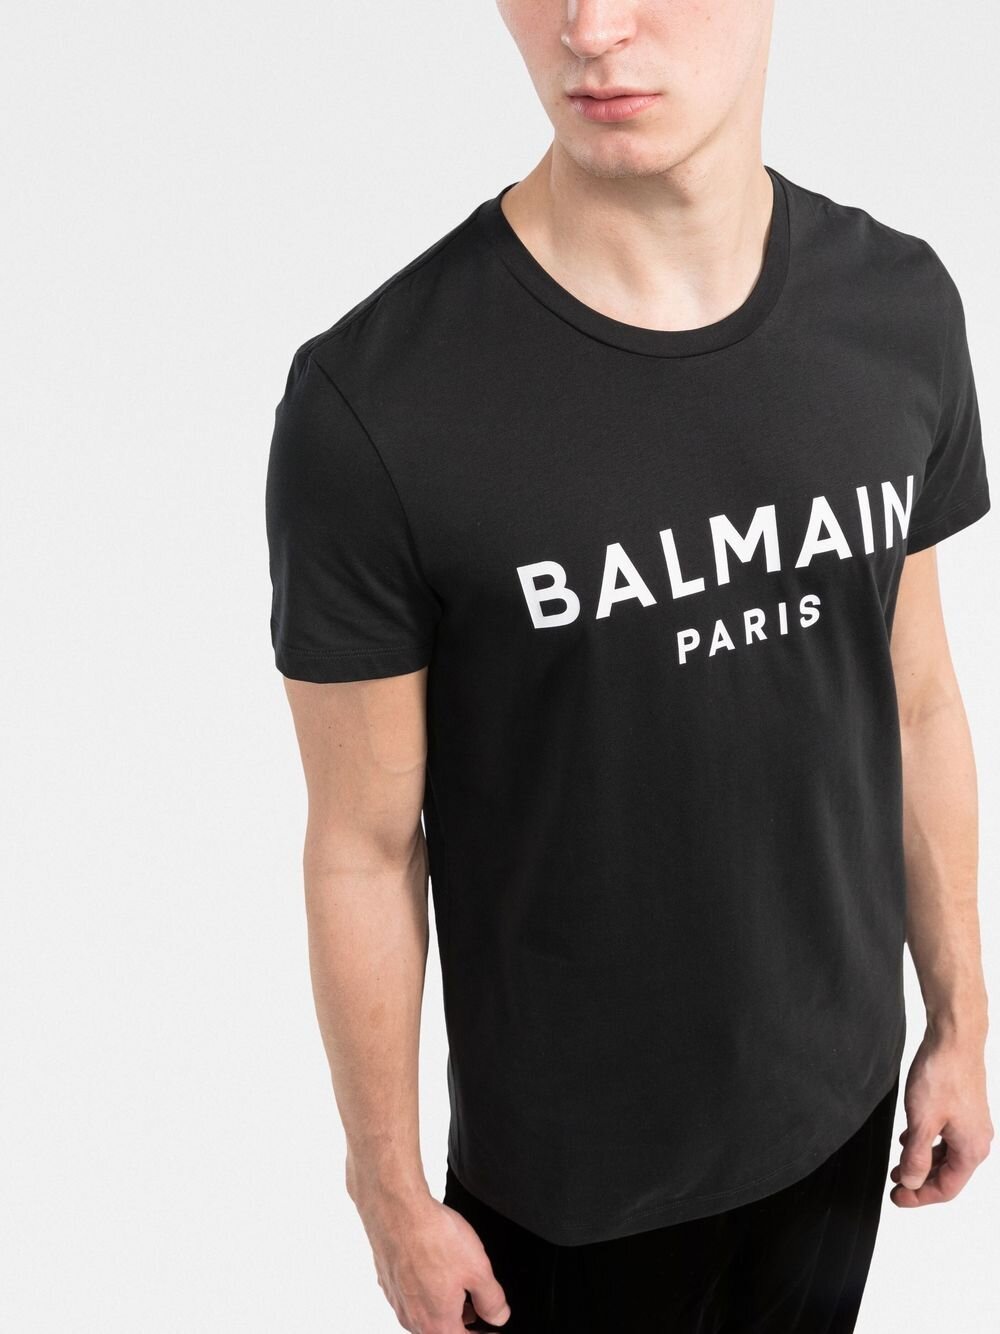 Balmain Paris Print Logo Black T-shirt